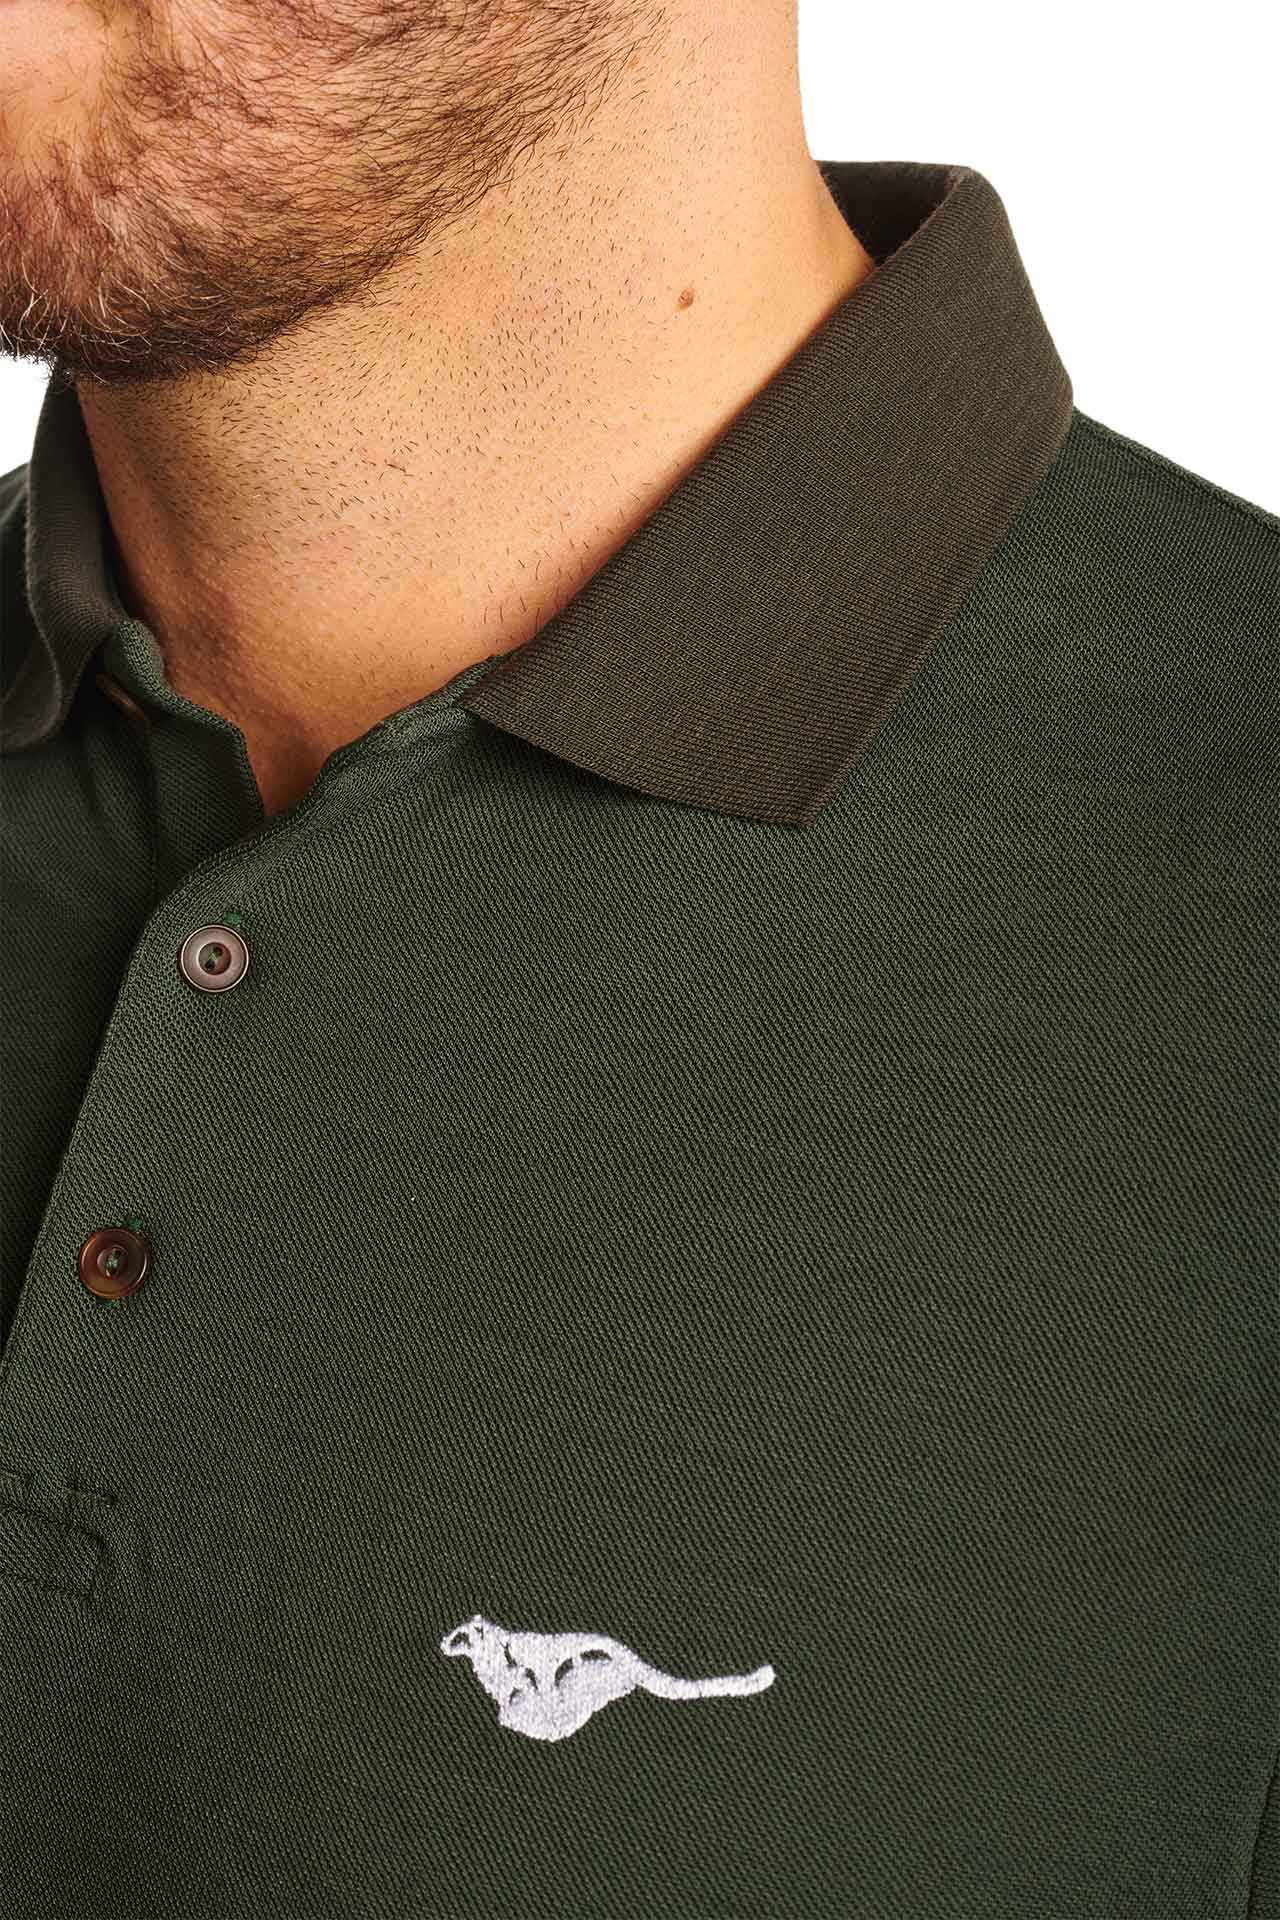 pine-green-mix-biodegradable-pure-merino-wool-golf-polo-shirt-for men-by-snöleo.-collar-model-closeup-view.